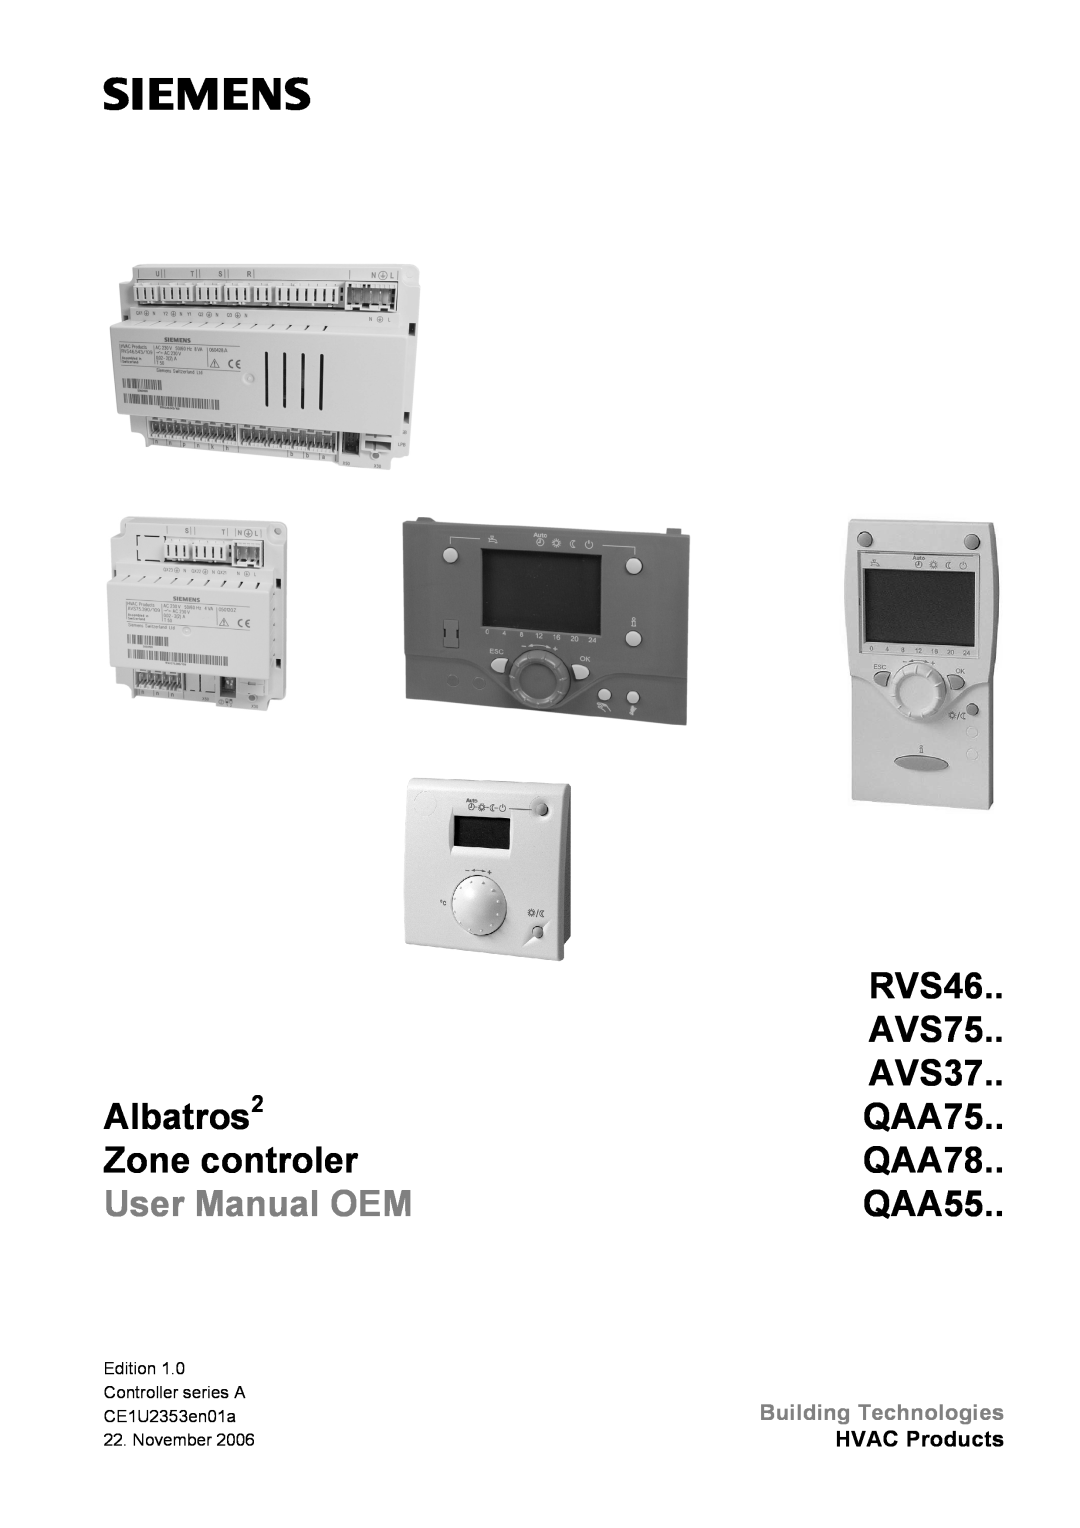 Siemens CE1U2353en01a user manual RVS46, AVS75, Albatros2, AVS37, Zone controler, QAA75, QAA78, QAA55, HVAC Products 